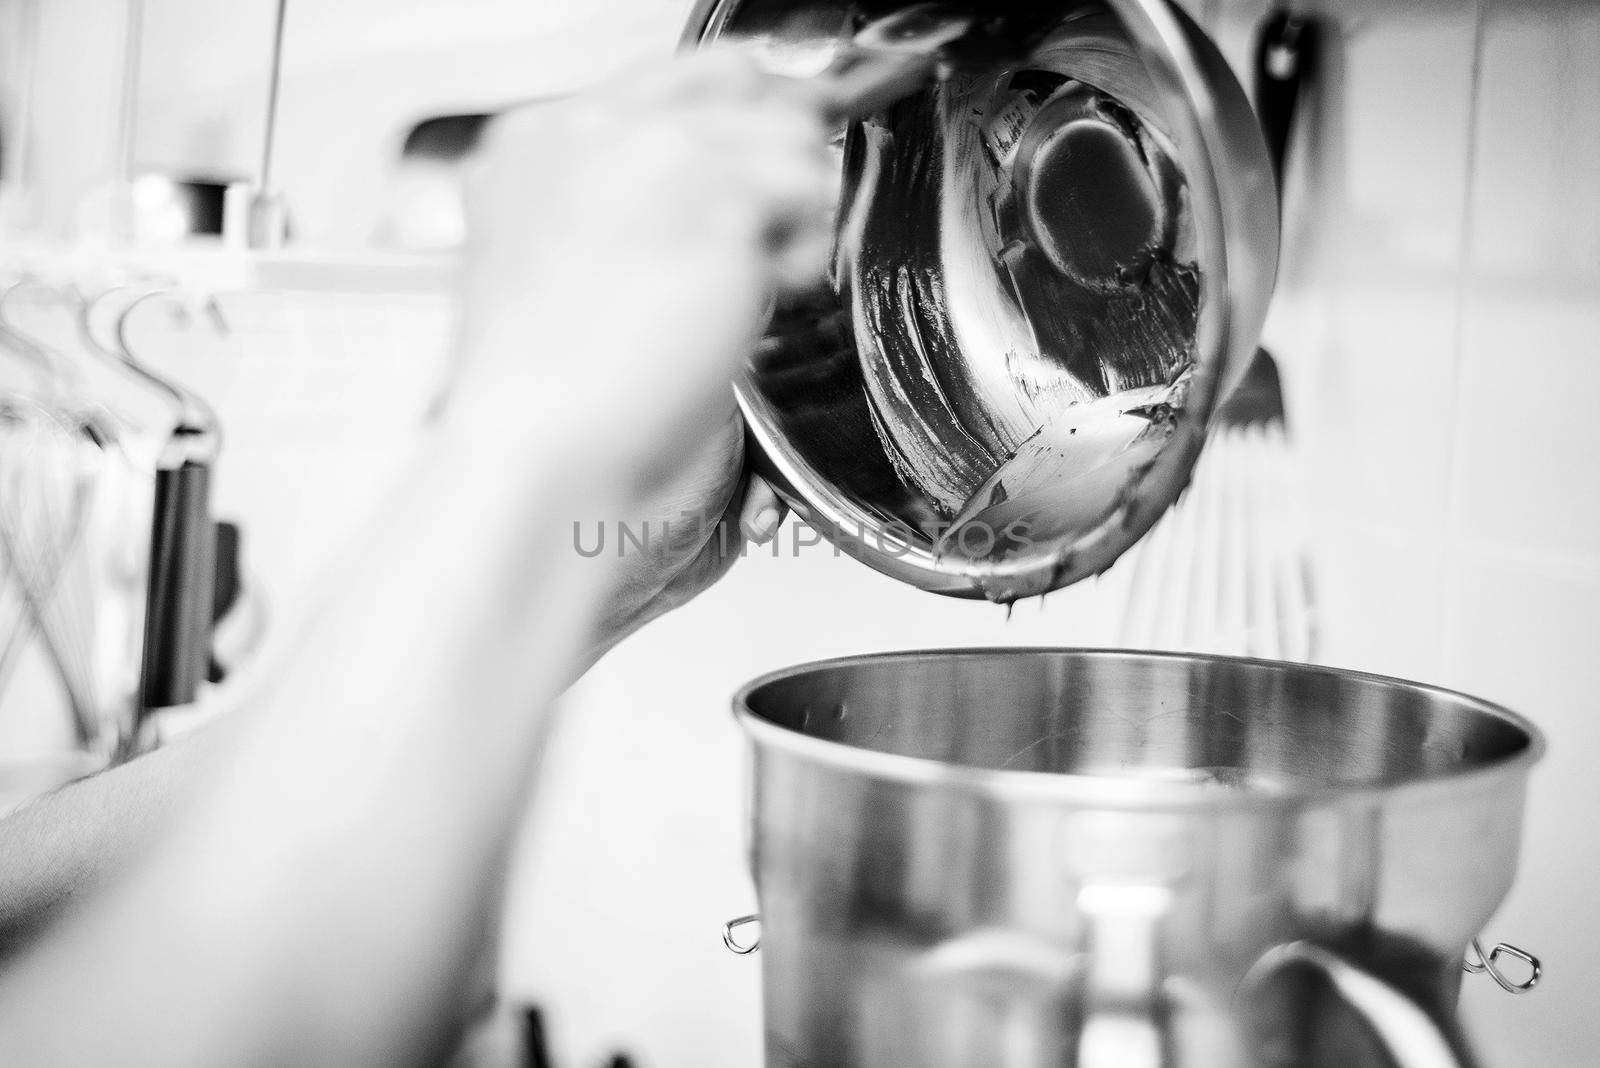 making gelato ice cream with modern professional equipment preparation detail in kitchen interior black and white photo